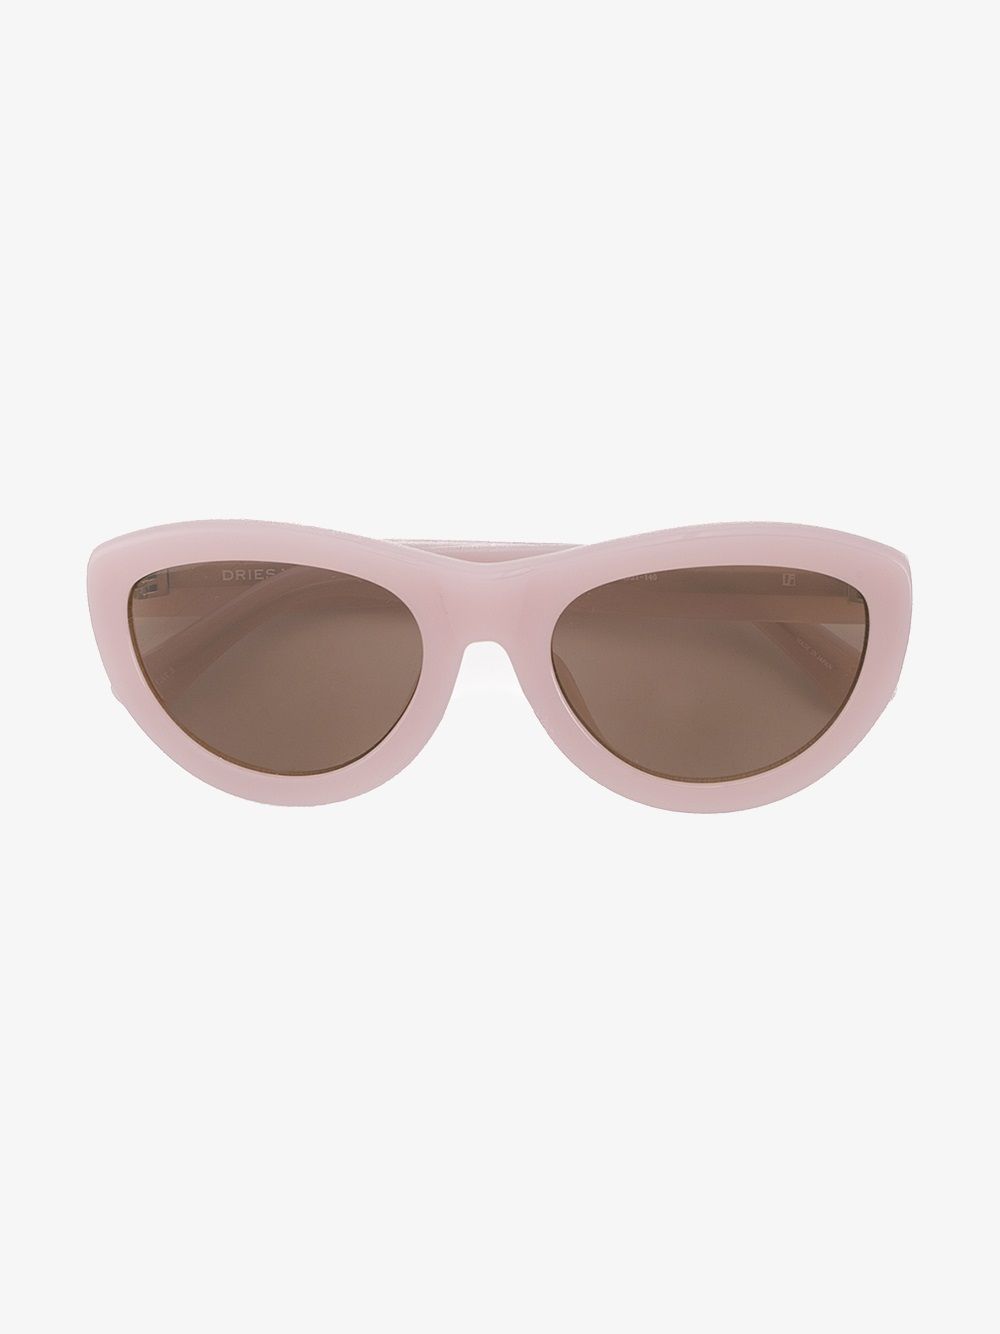 Linda Farrow Dries Van Noten Pink Sunglasses | Browns Fashion